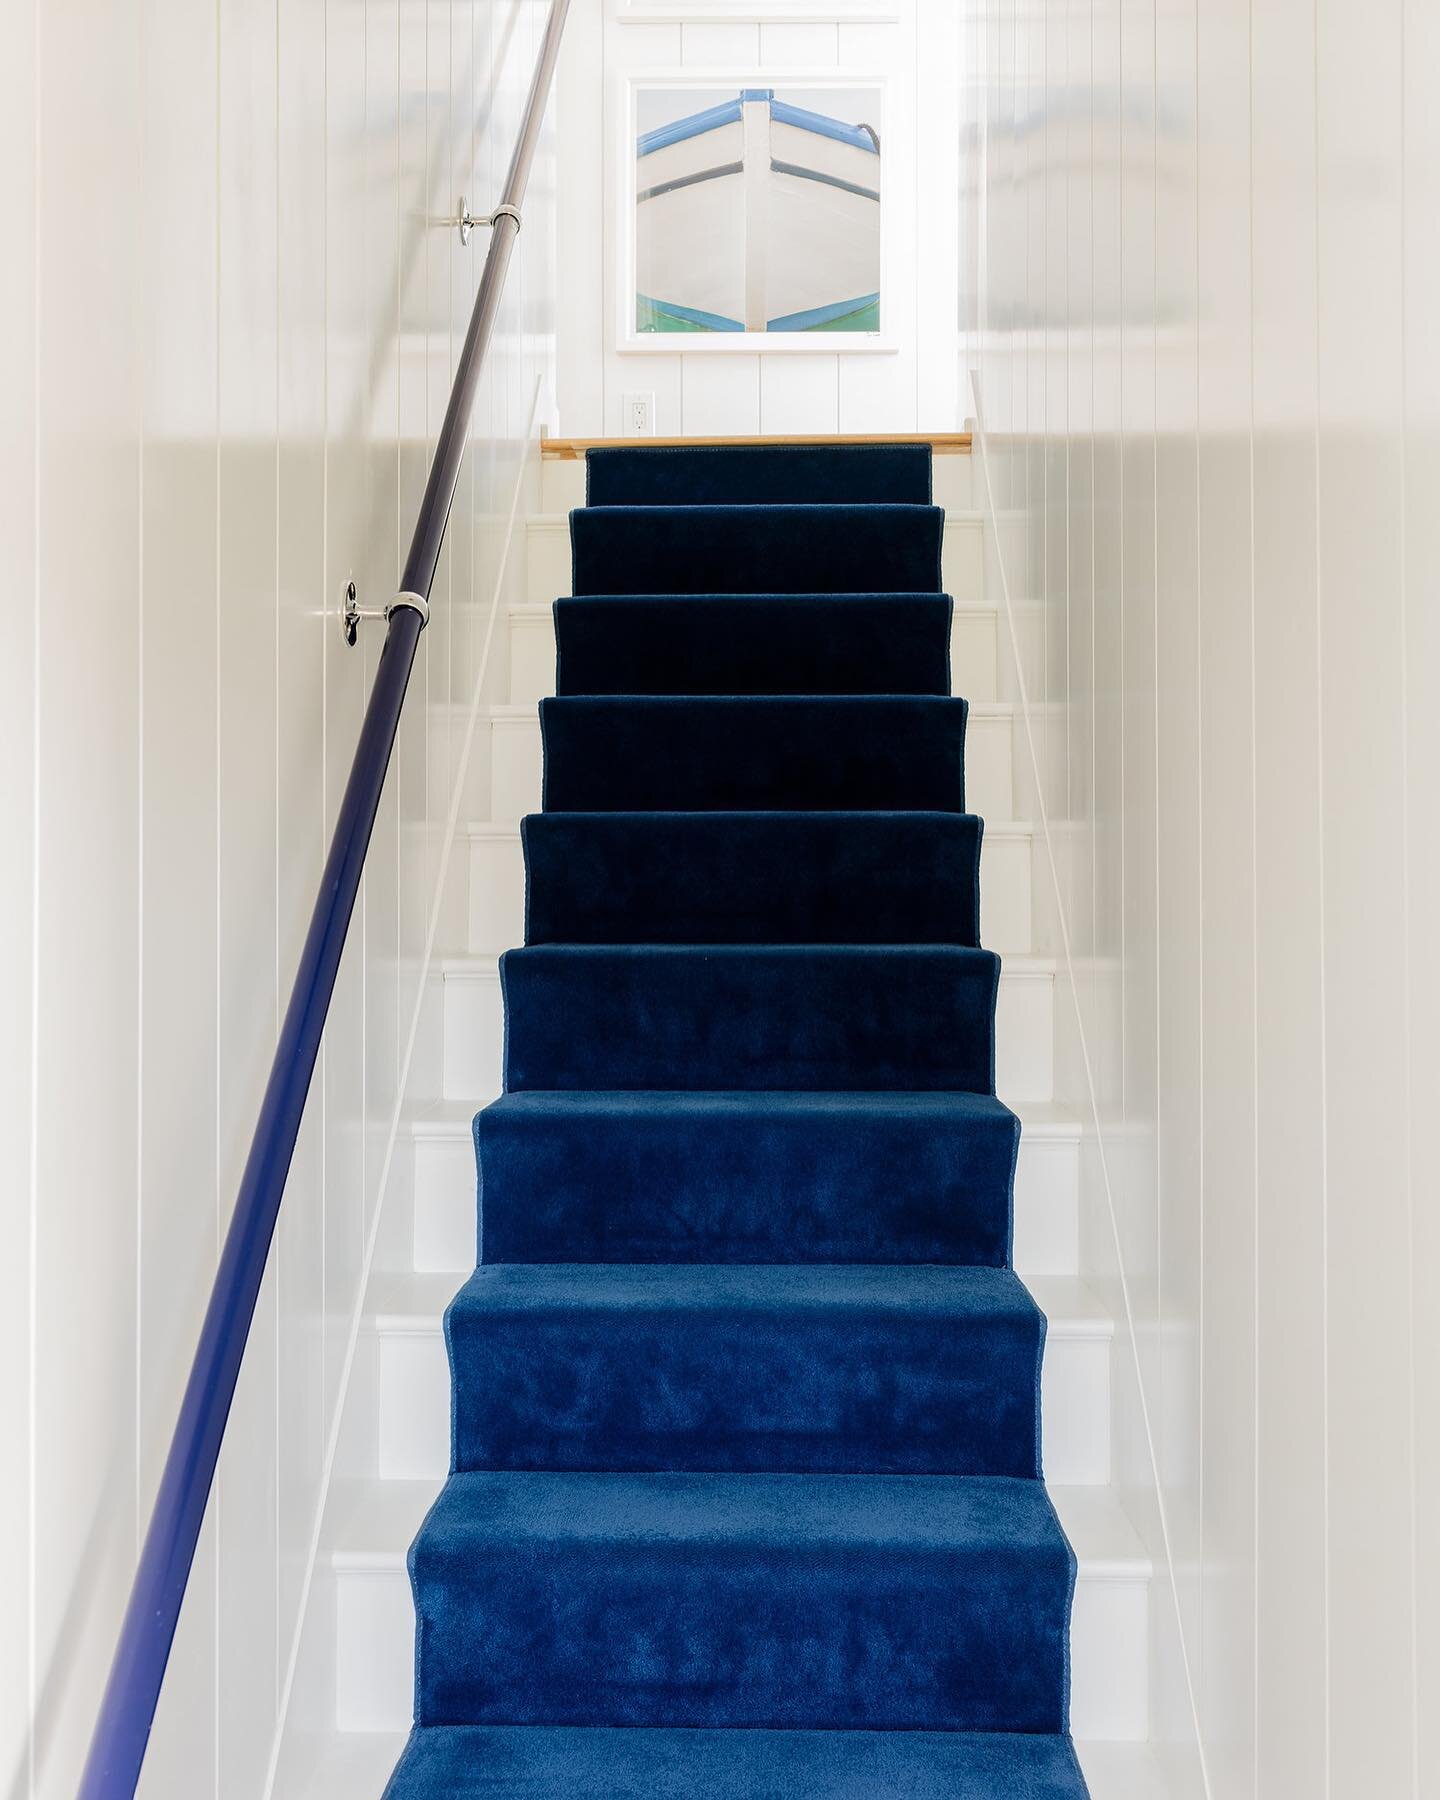 Stairway to heaven ⚓️

📸 by @michaeljleephotography 

.
.
.

#nancyhillinteriors #nancyhill #nhi #interiordesign #interiordecorating #interiordesigner #interiordecor #interior #interiors #design #decor #homedecor #home #newengland #boston #capecod #